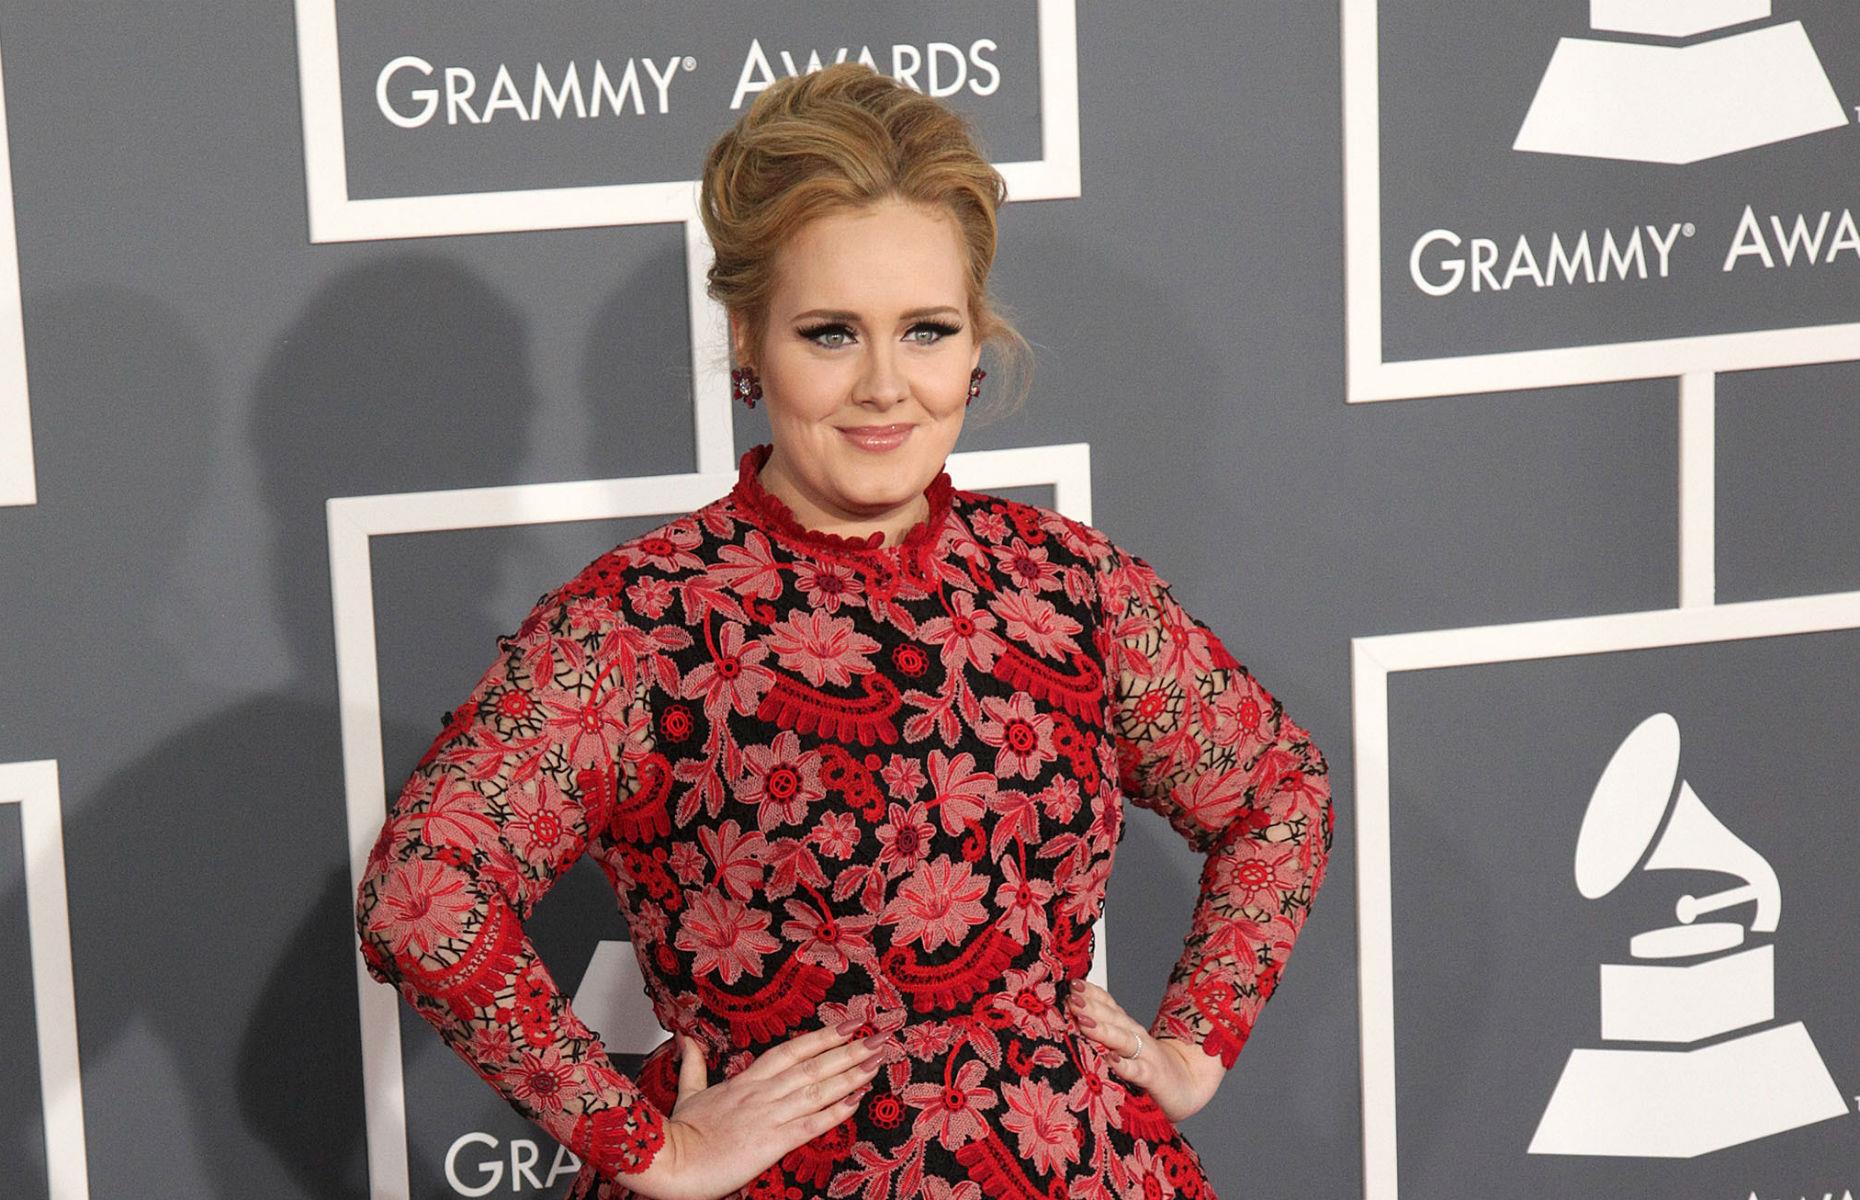 9) Adele